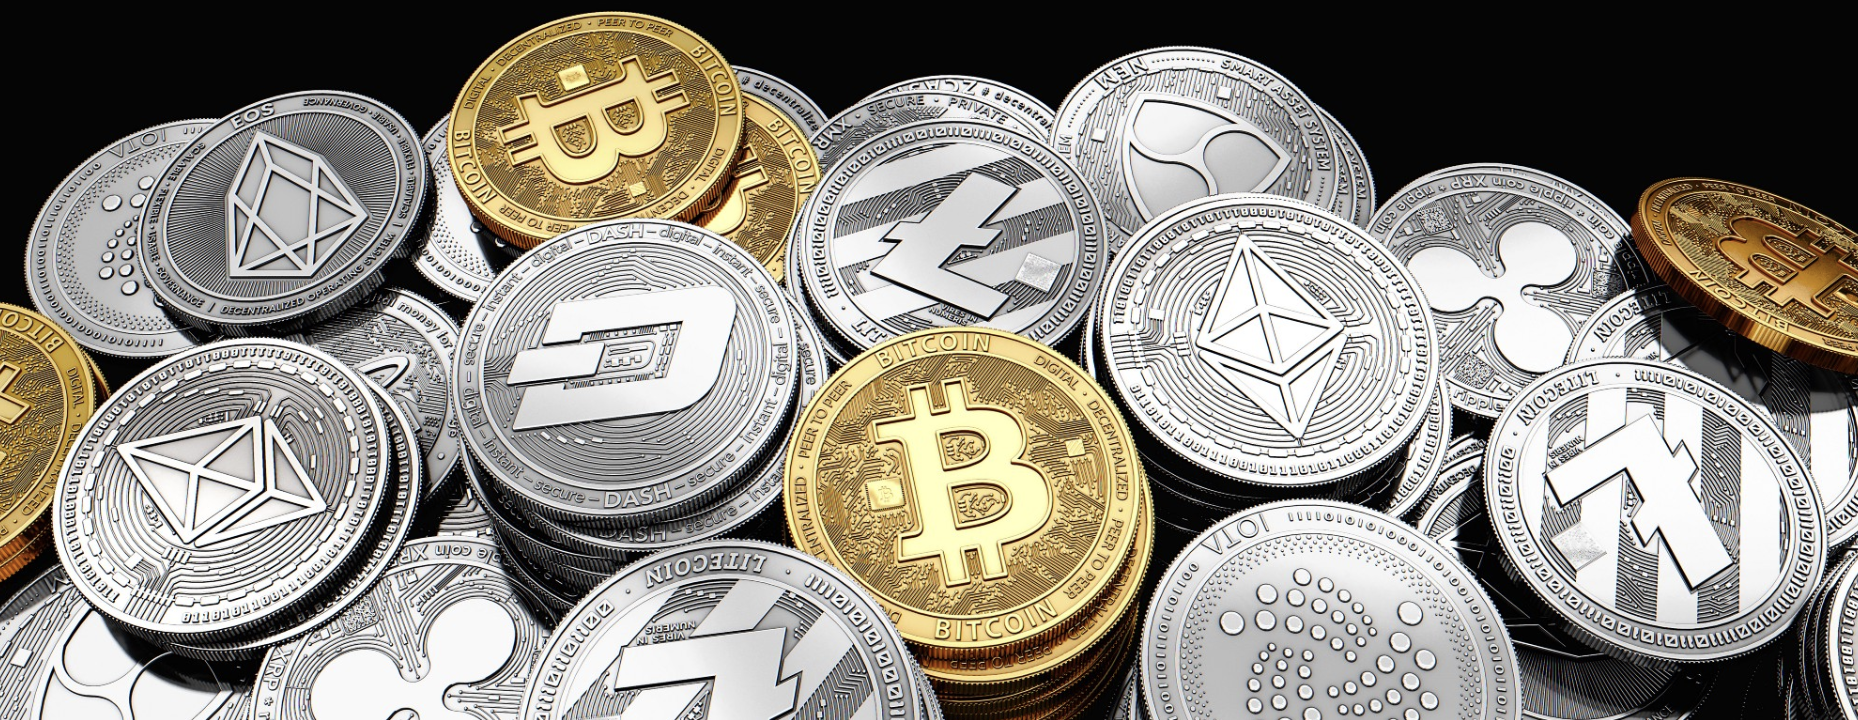 noi bitcoin bonus senza deposito